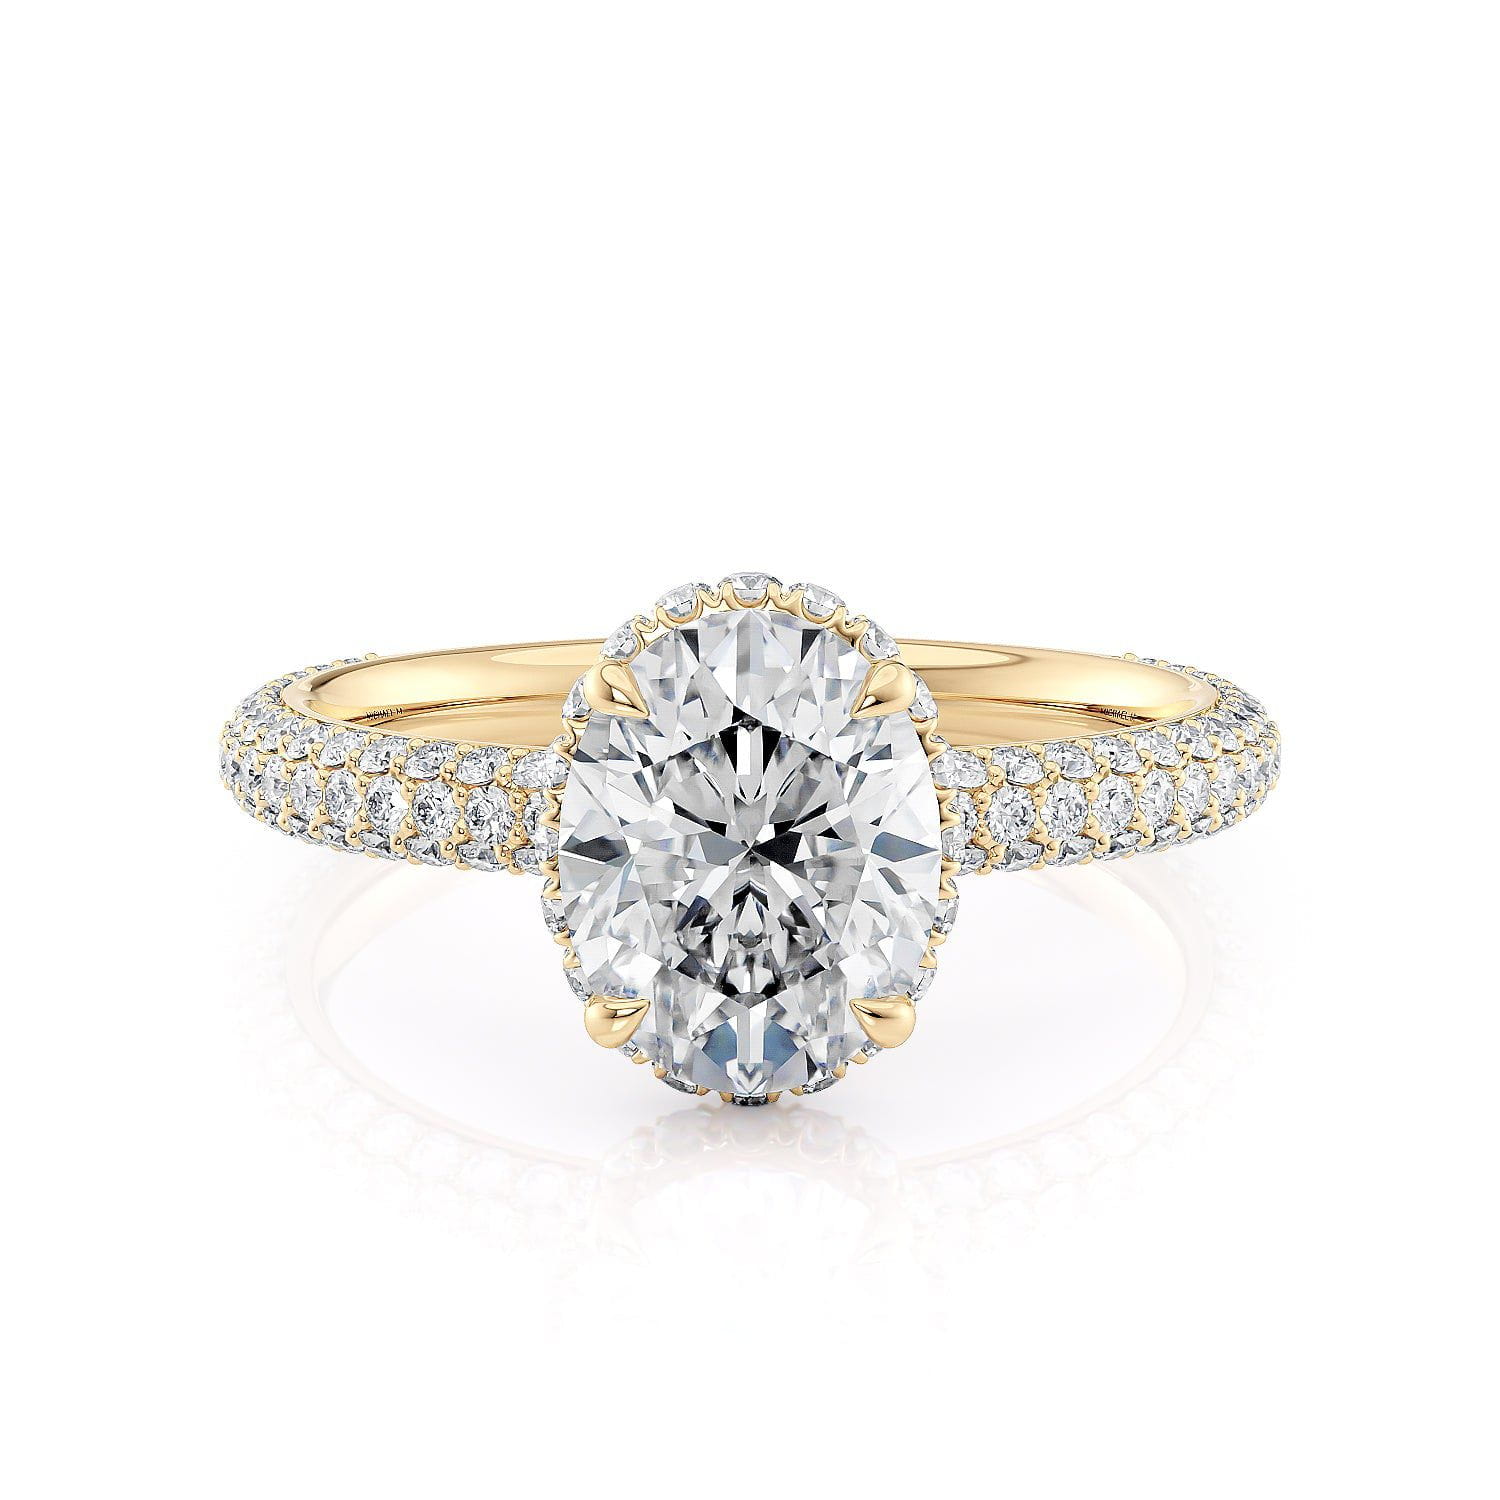 MICHAEL M Engagement Rings Crown R808-2.5